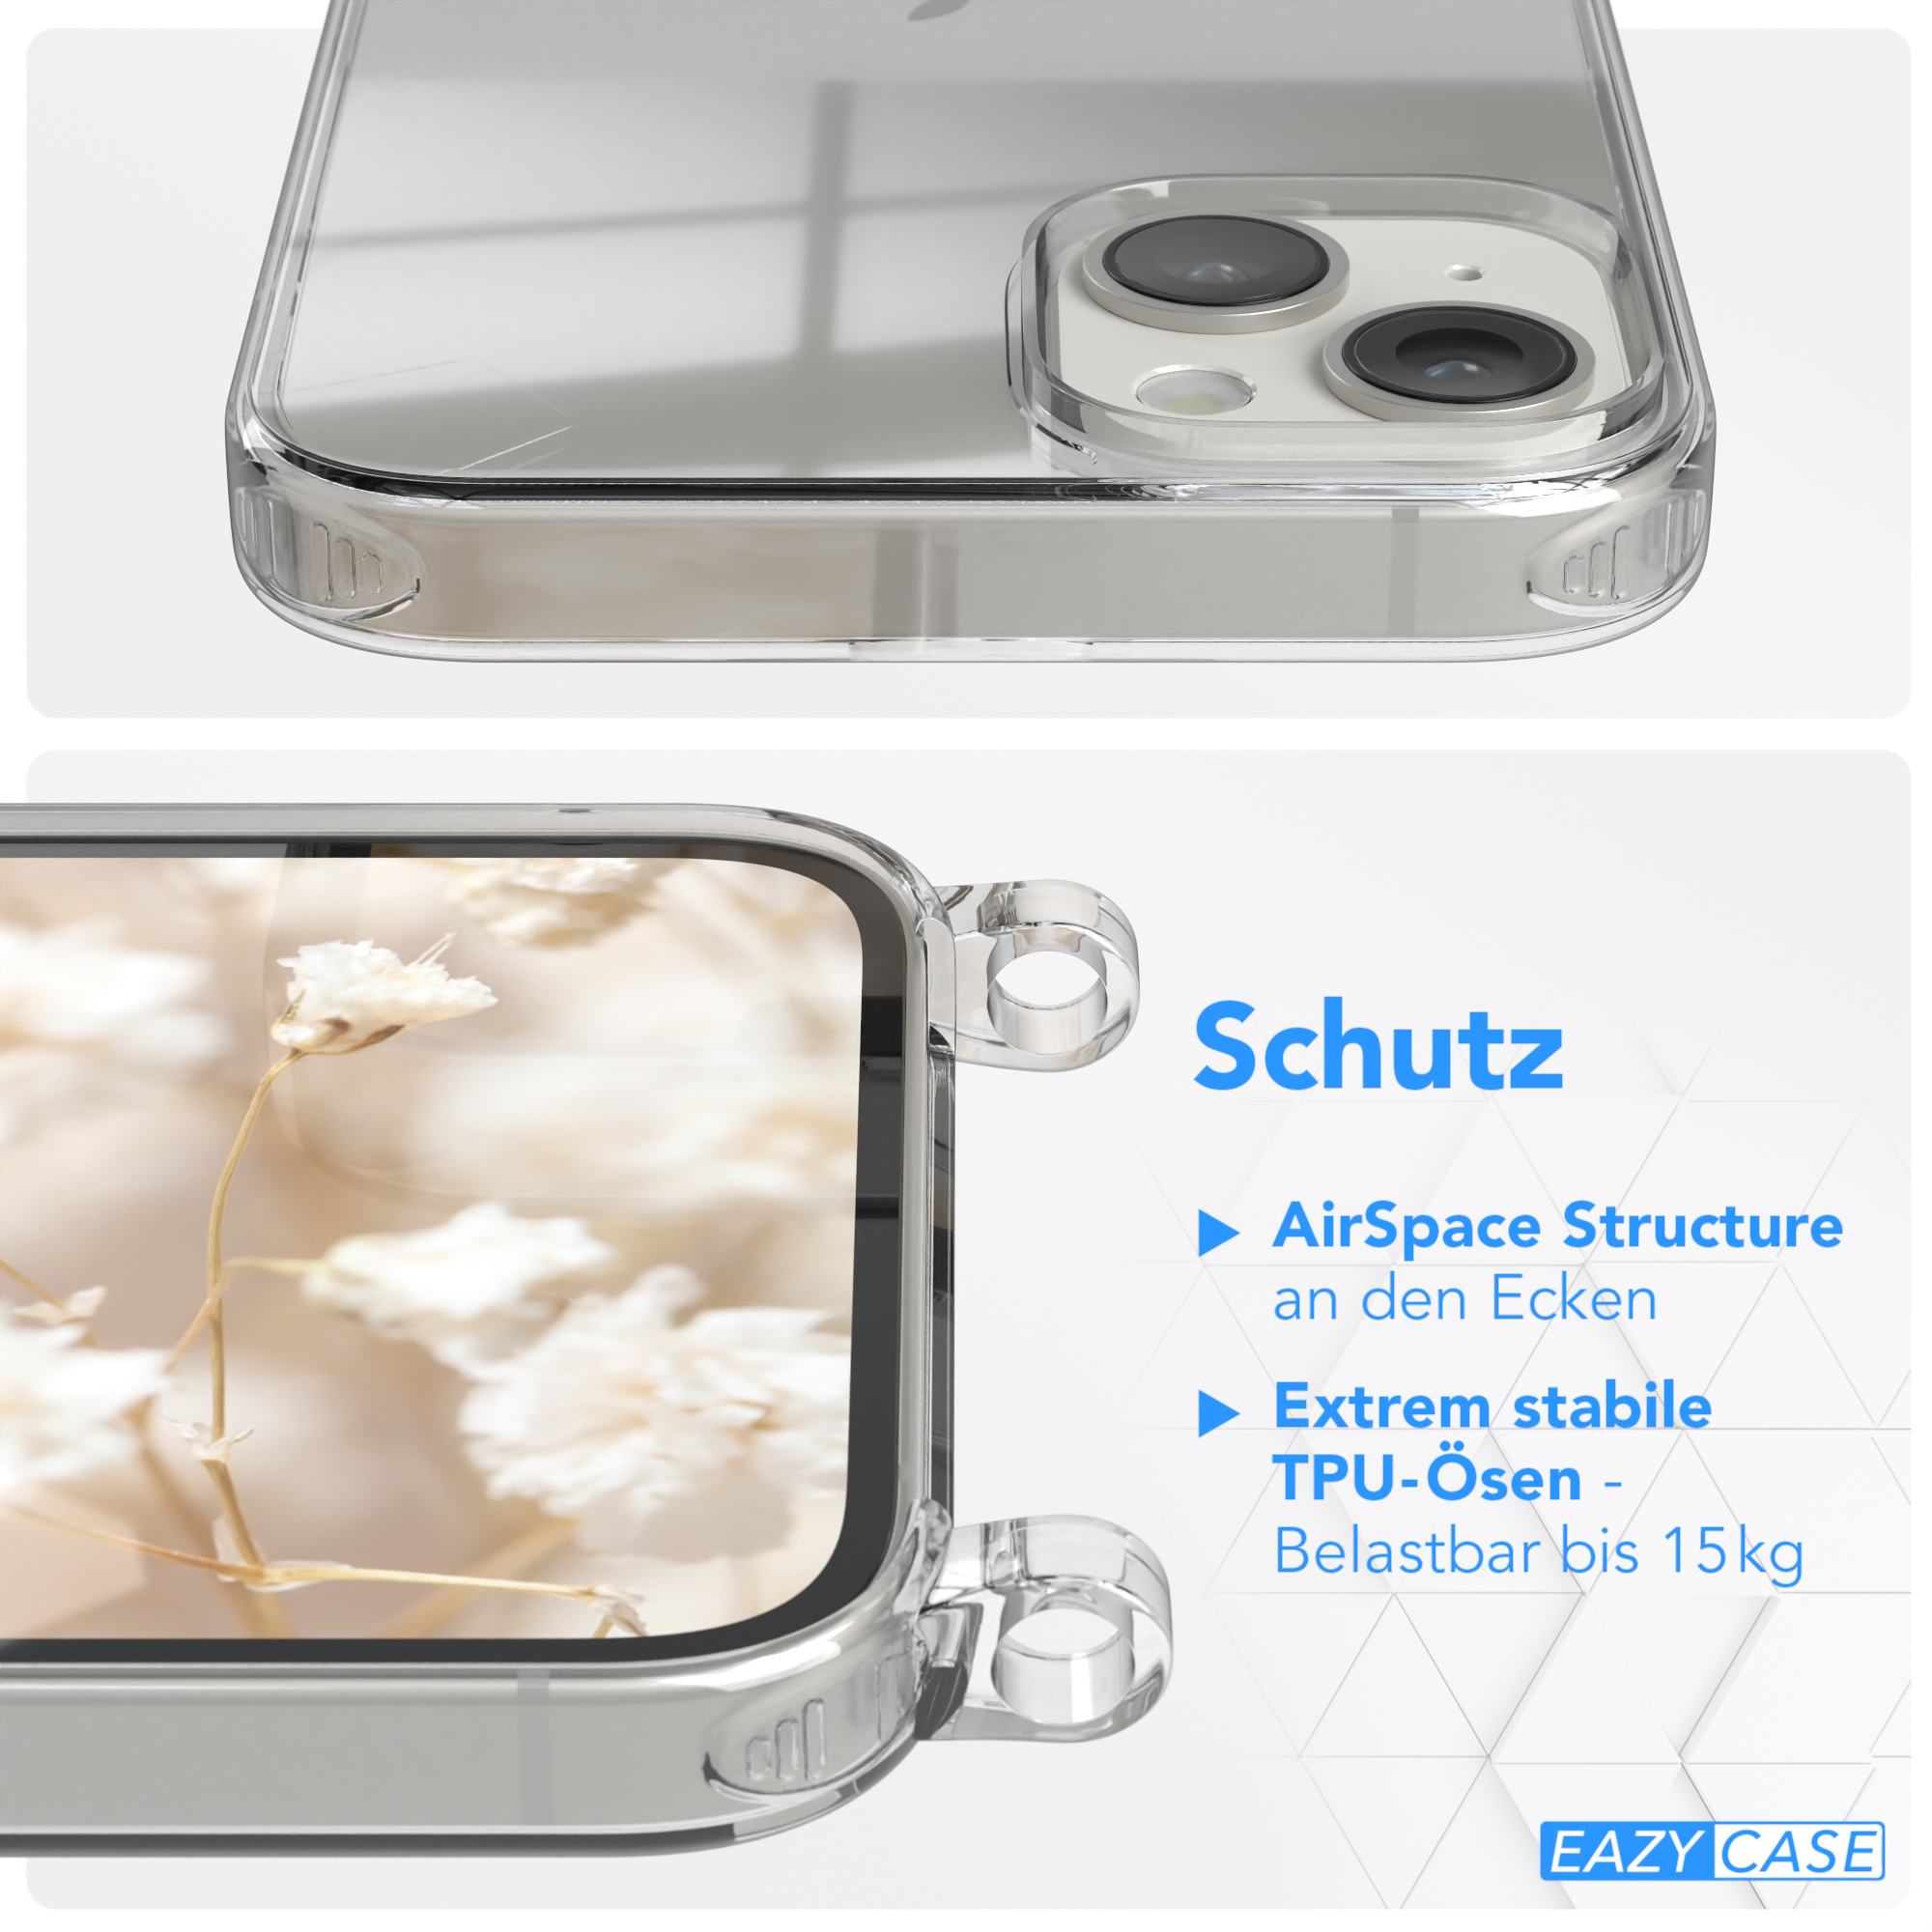 iPhone Plus, EAZY Kordel Boho Orange Transparente Grün Style, mit Umhängetasche, 14 CASE Handyhülle / Apple,